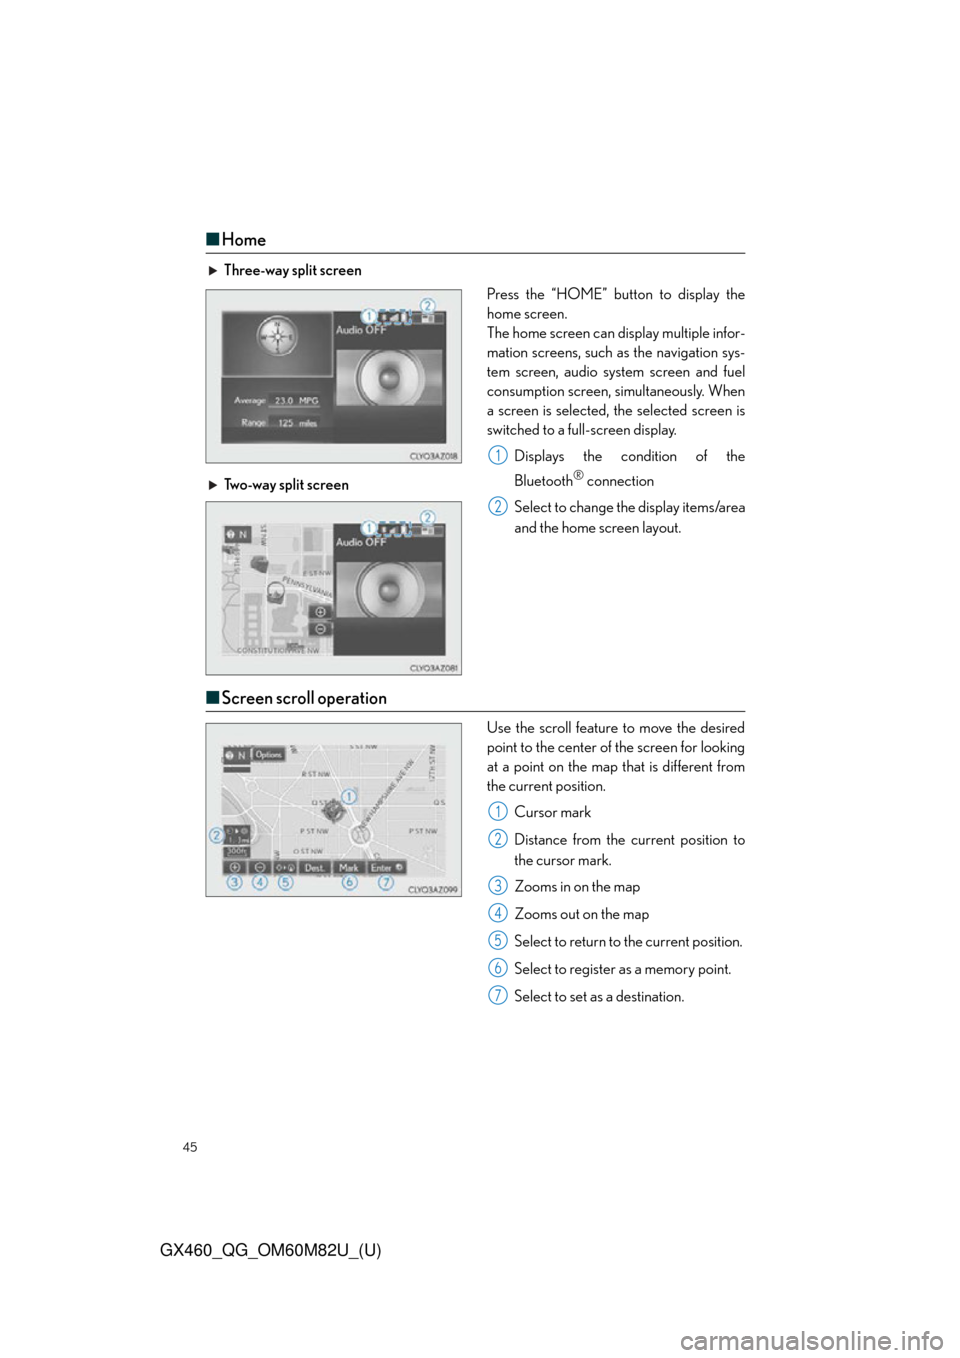 Lexus GX460 2016  Navigation Manual / LEXUS 2016 GX460  QUICK GUIDE (OM60M82U) Service Manual 45
GX460_QG_OM60M82U_(U)
■Home
Three-way split screen
Press the “HOME” button to display the
home screen.
The home screen can display multiple infor-
mation screens, such as the navigation sys-
